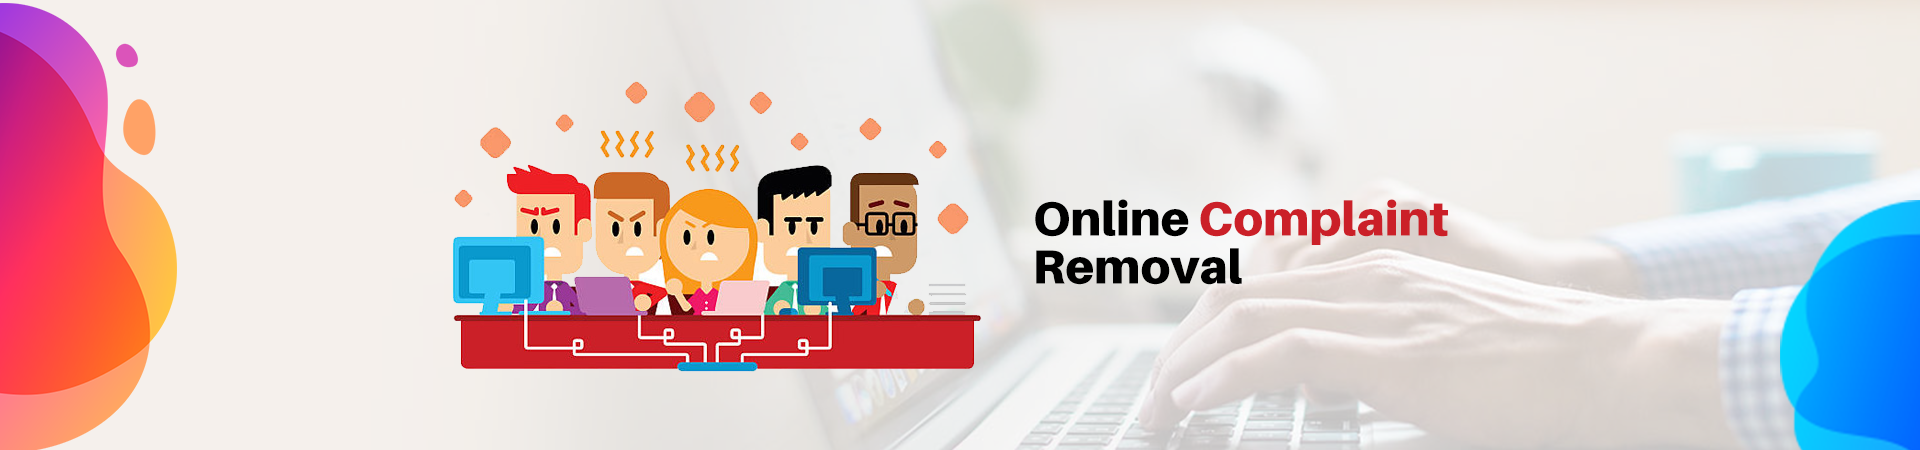 Online Complaint Removal